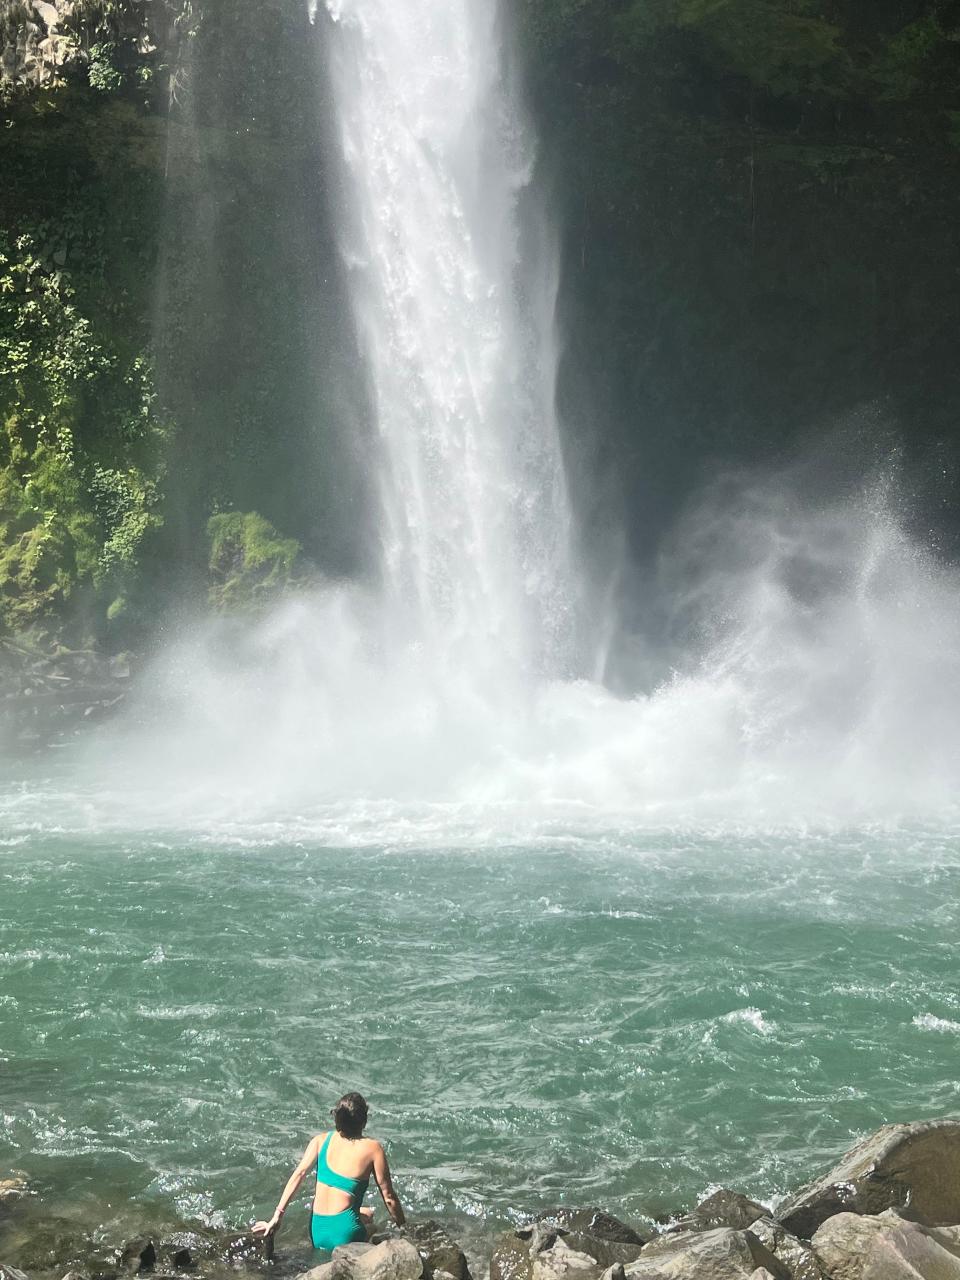 The La Fortuna Waterfall in Costa Rica